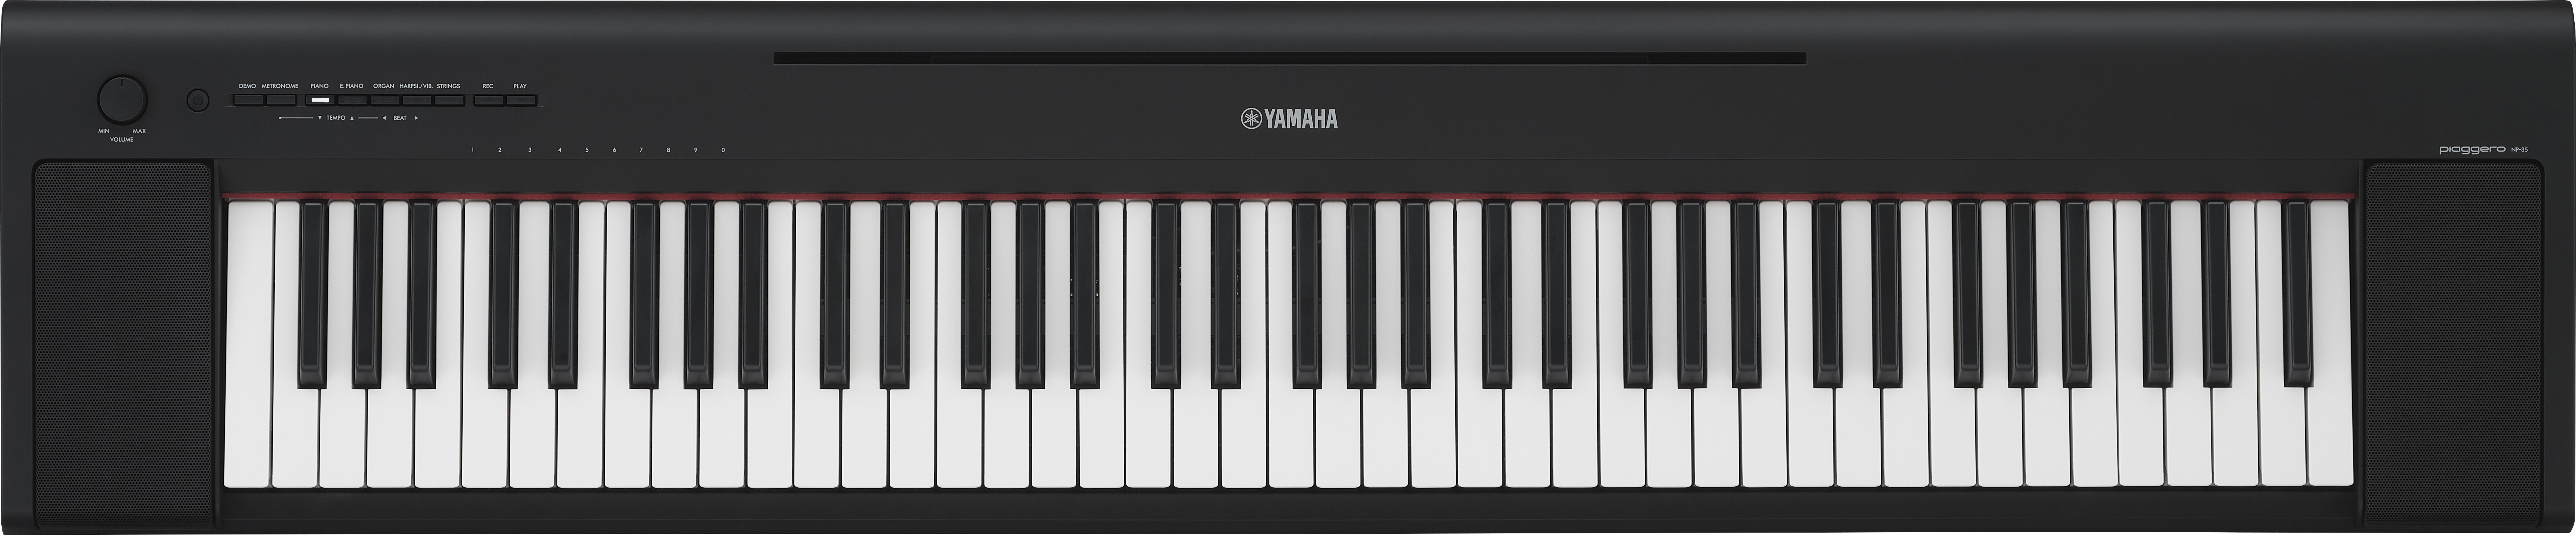 Yamaha NP35 76 key Portable Digital Piano in Black -  NP35B